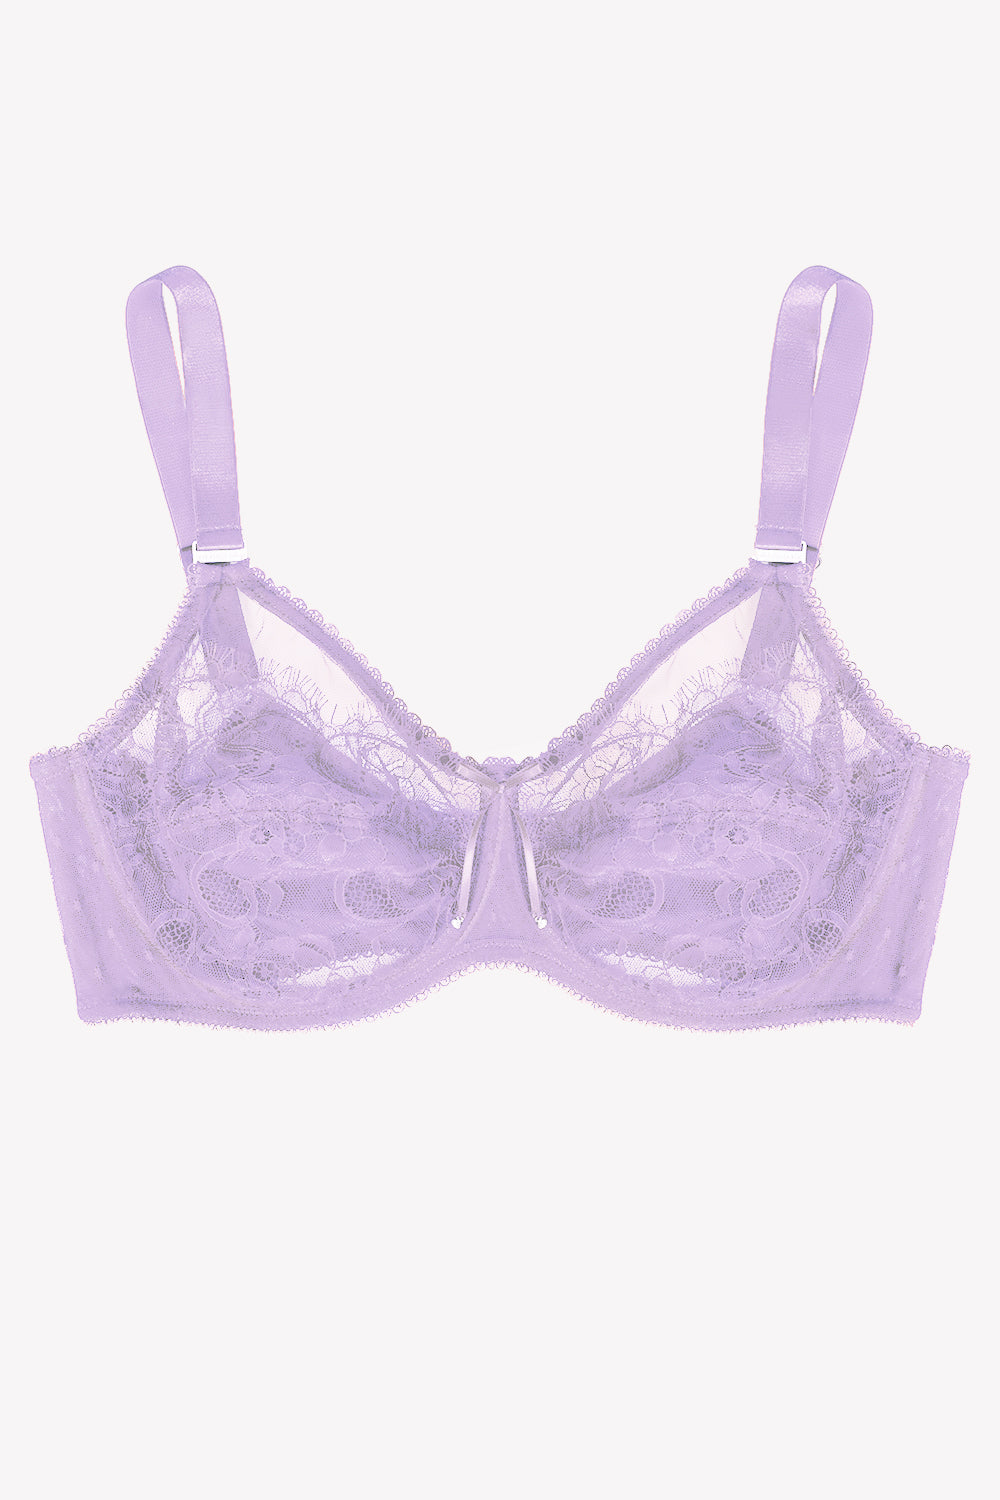 Smart & Sexy Women's Plus Size Retro Lace & Mesh Unlined Underwire Bra  Lilac Iris 38g : Target